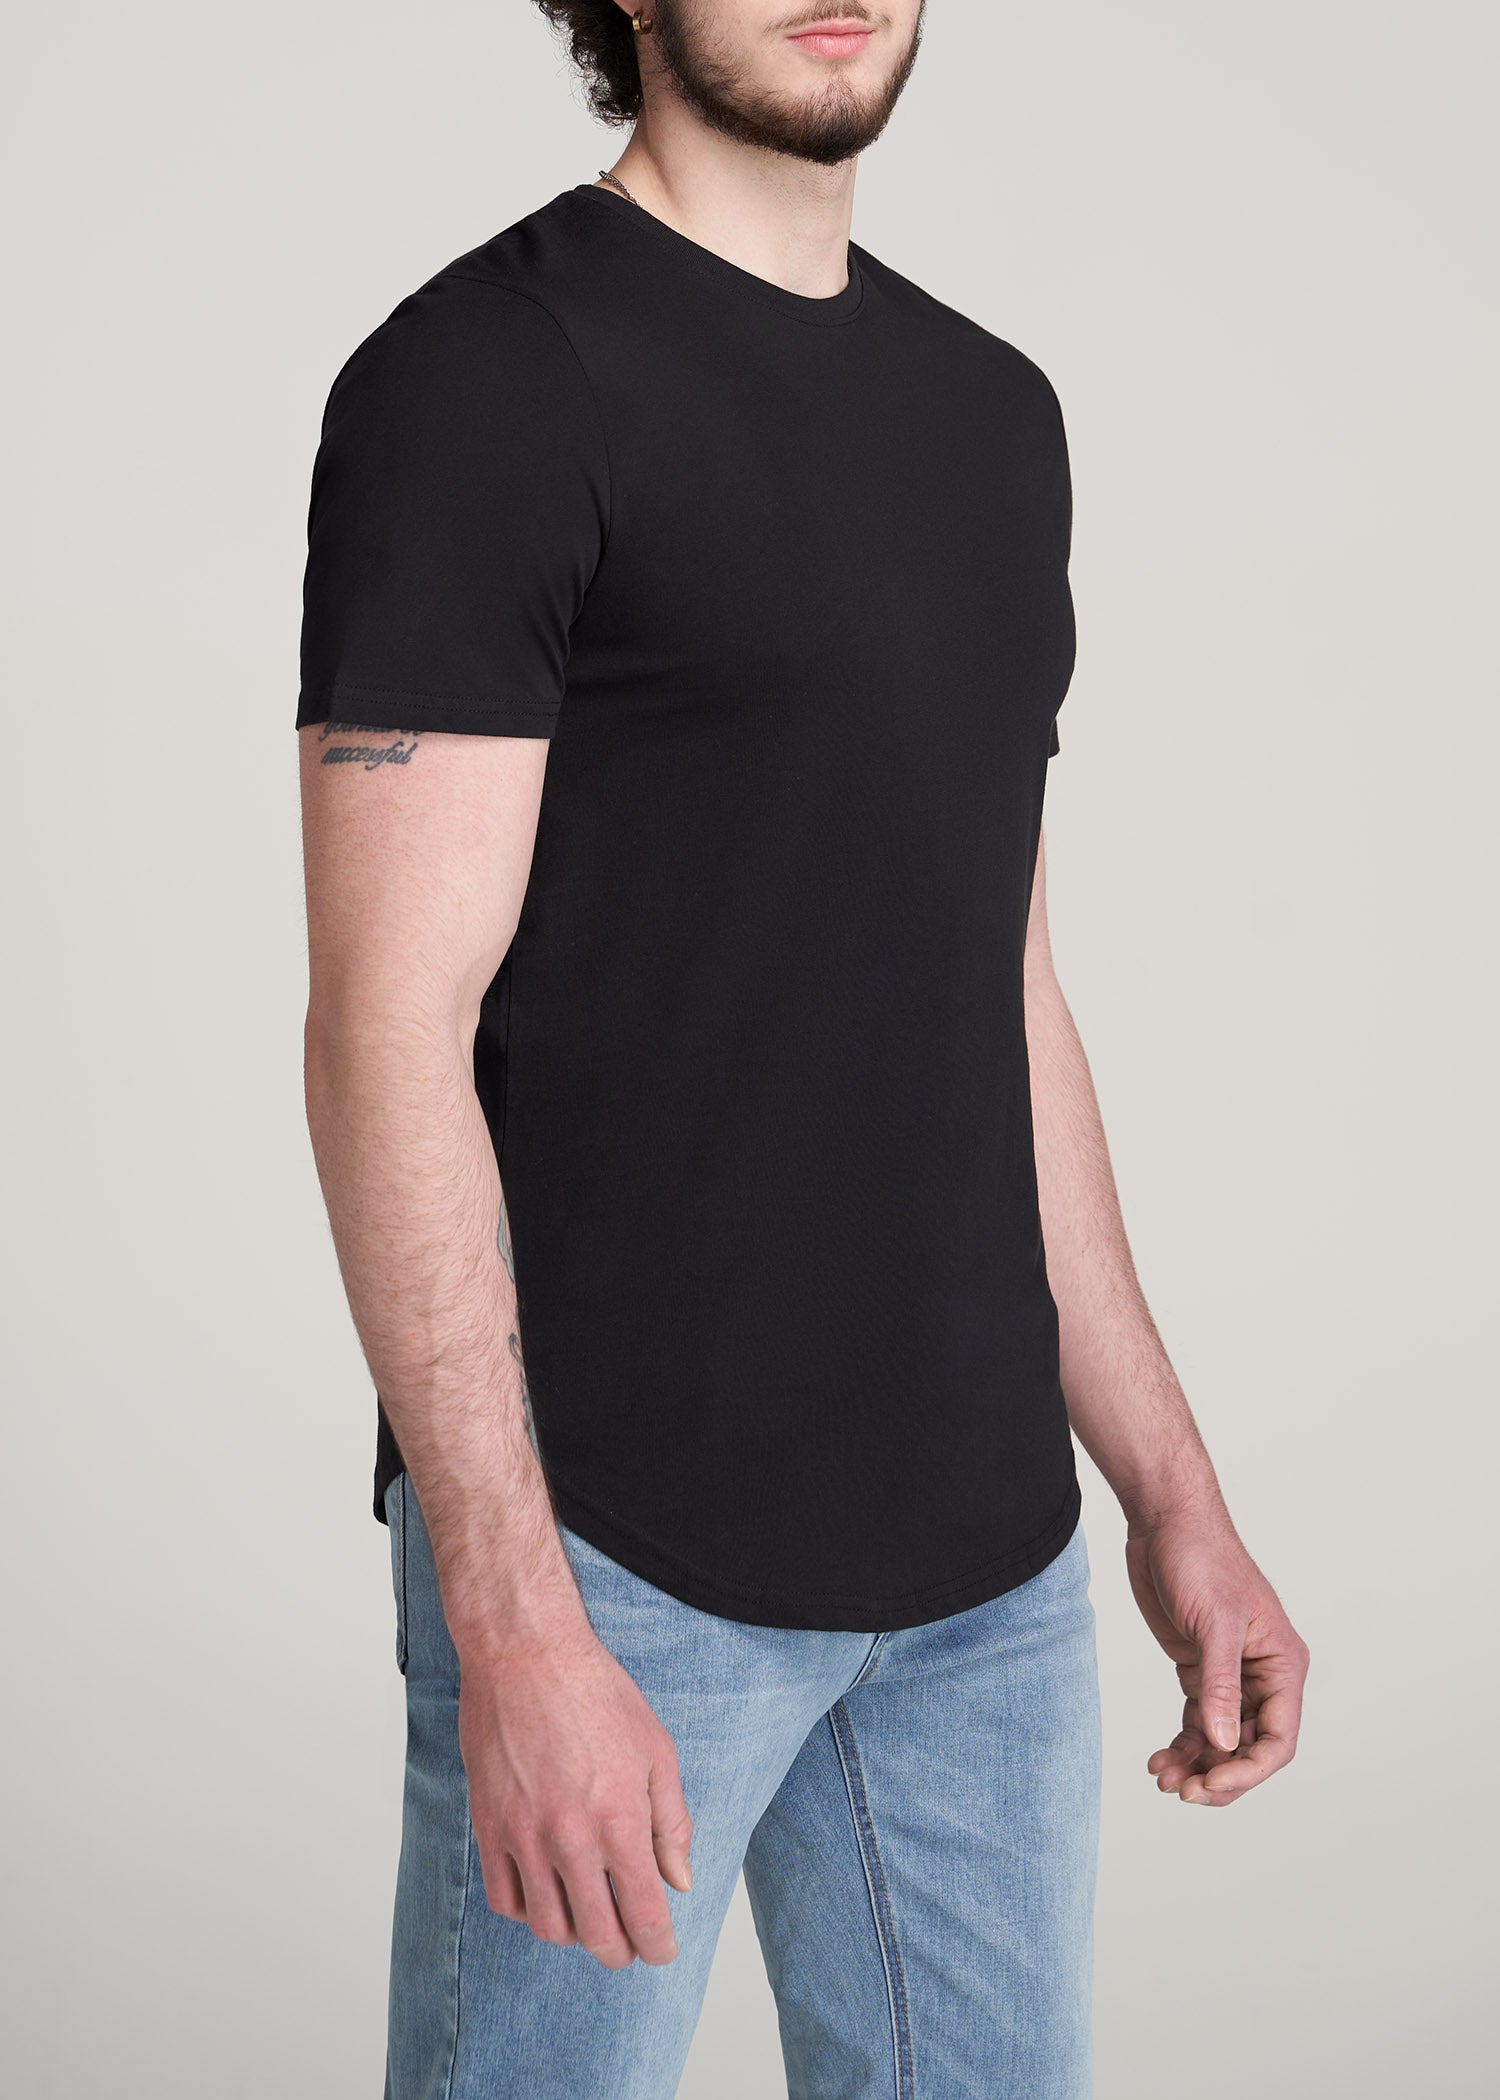 Scoop Neck T-shirts Mens: Men's Tall Bottom Black Tees | American Tall